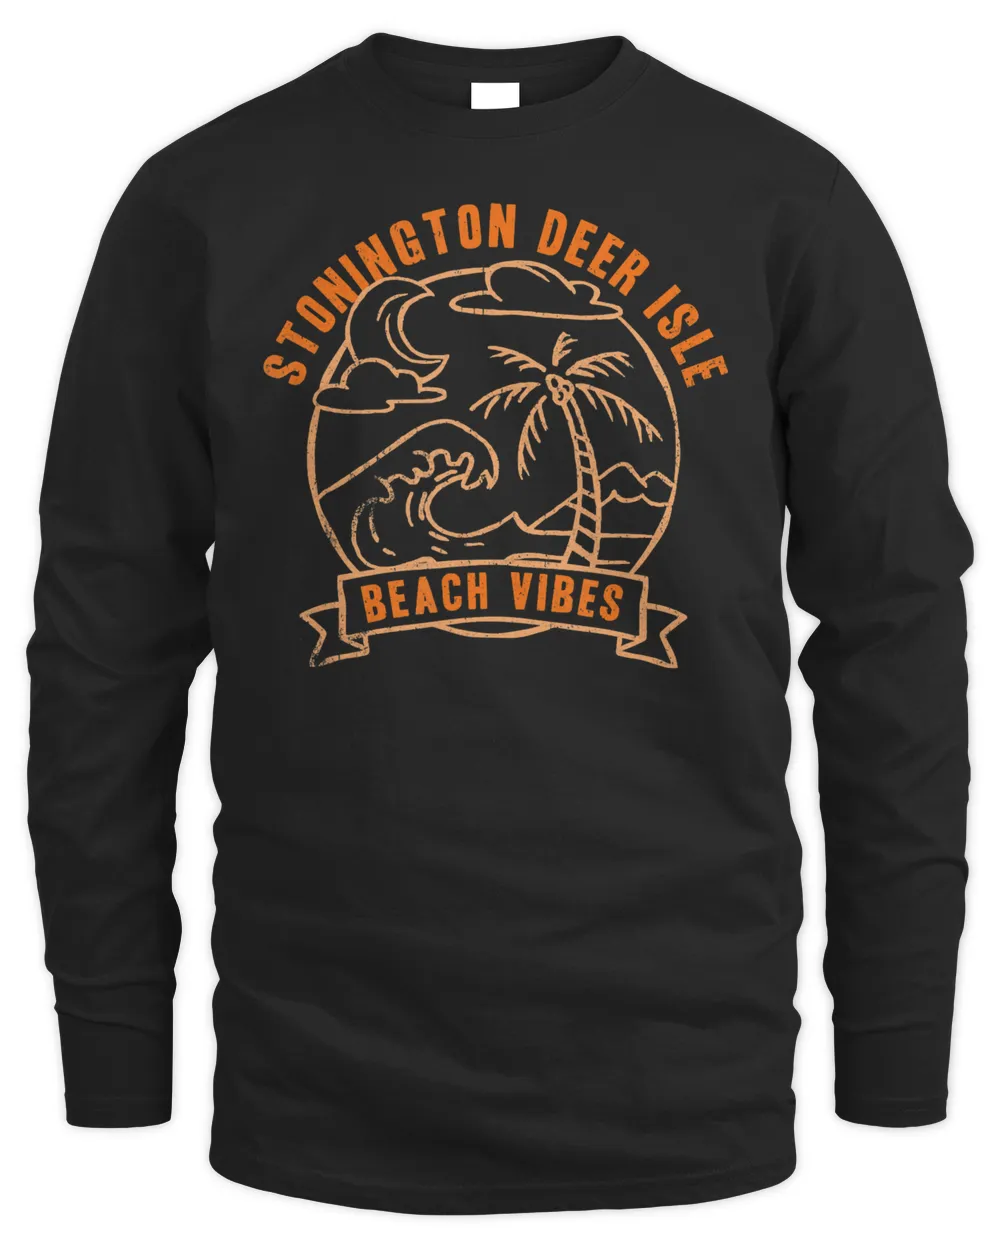 Beach Vibes Stonington Deer Isle Vacation Maine Tour T-Shirt